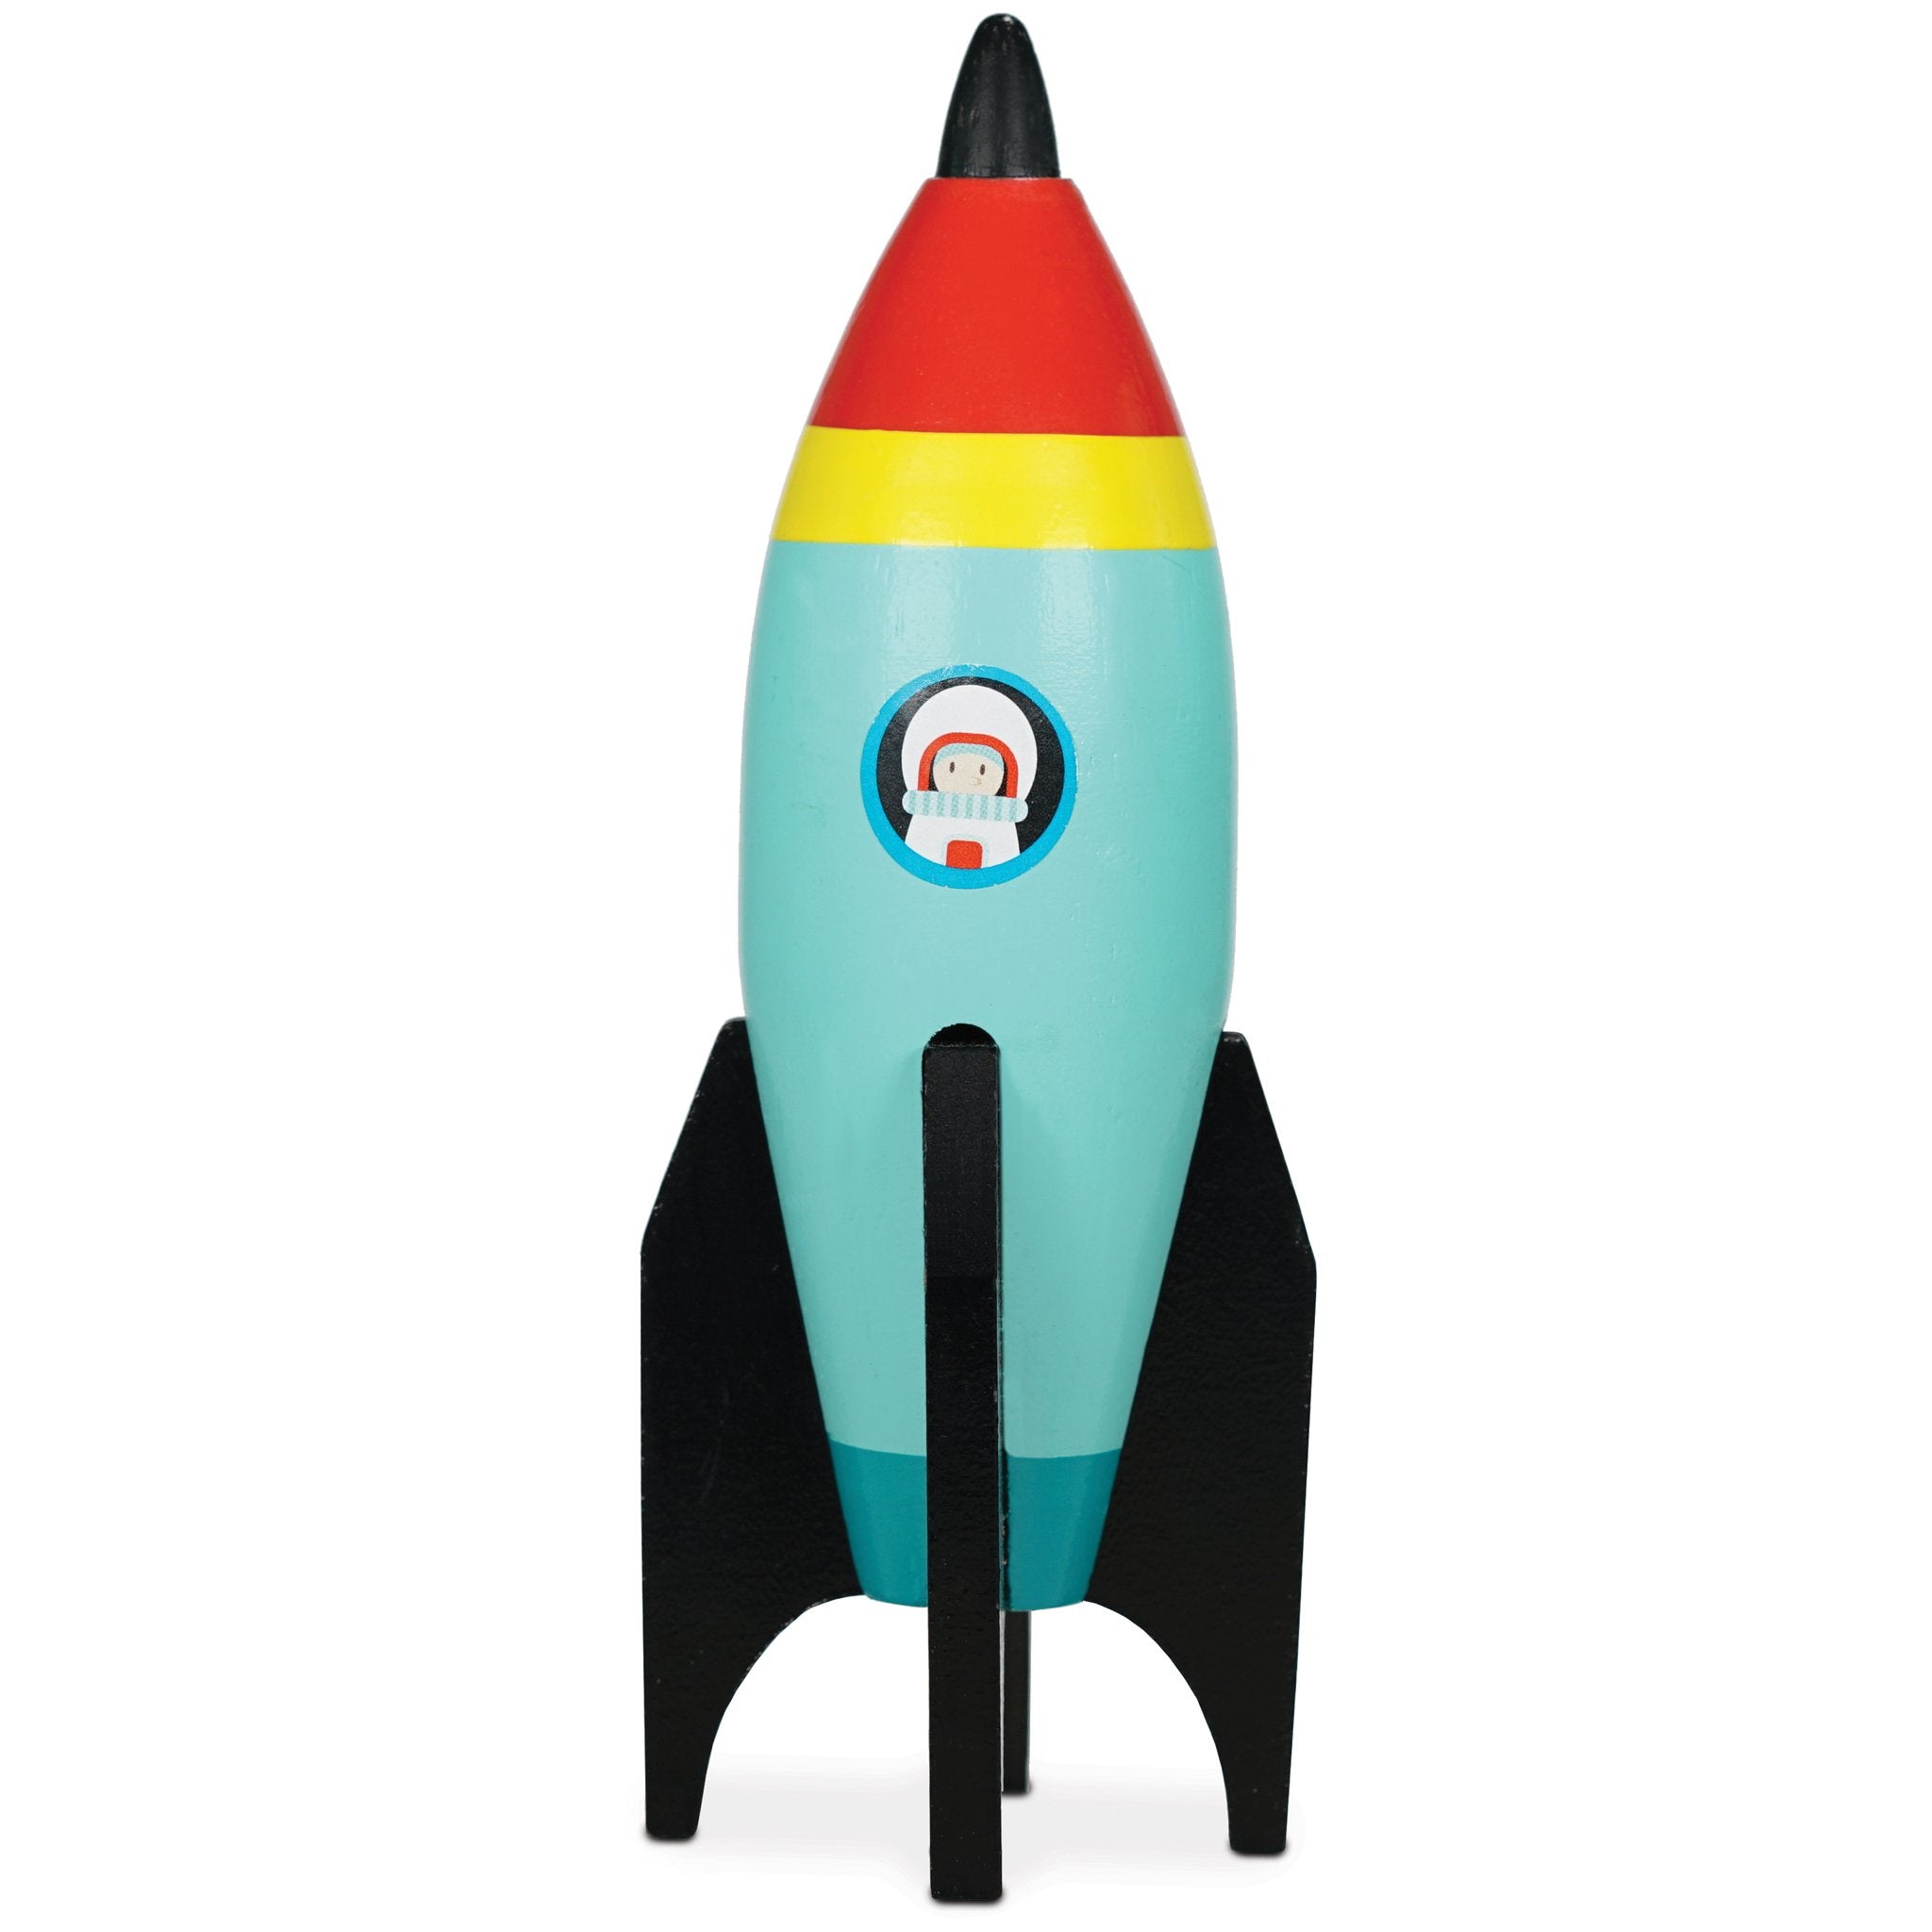 le toy van space rocket